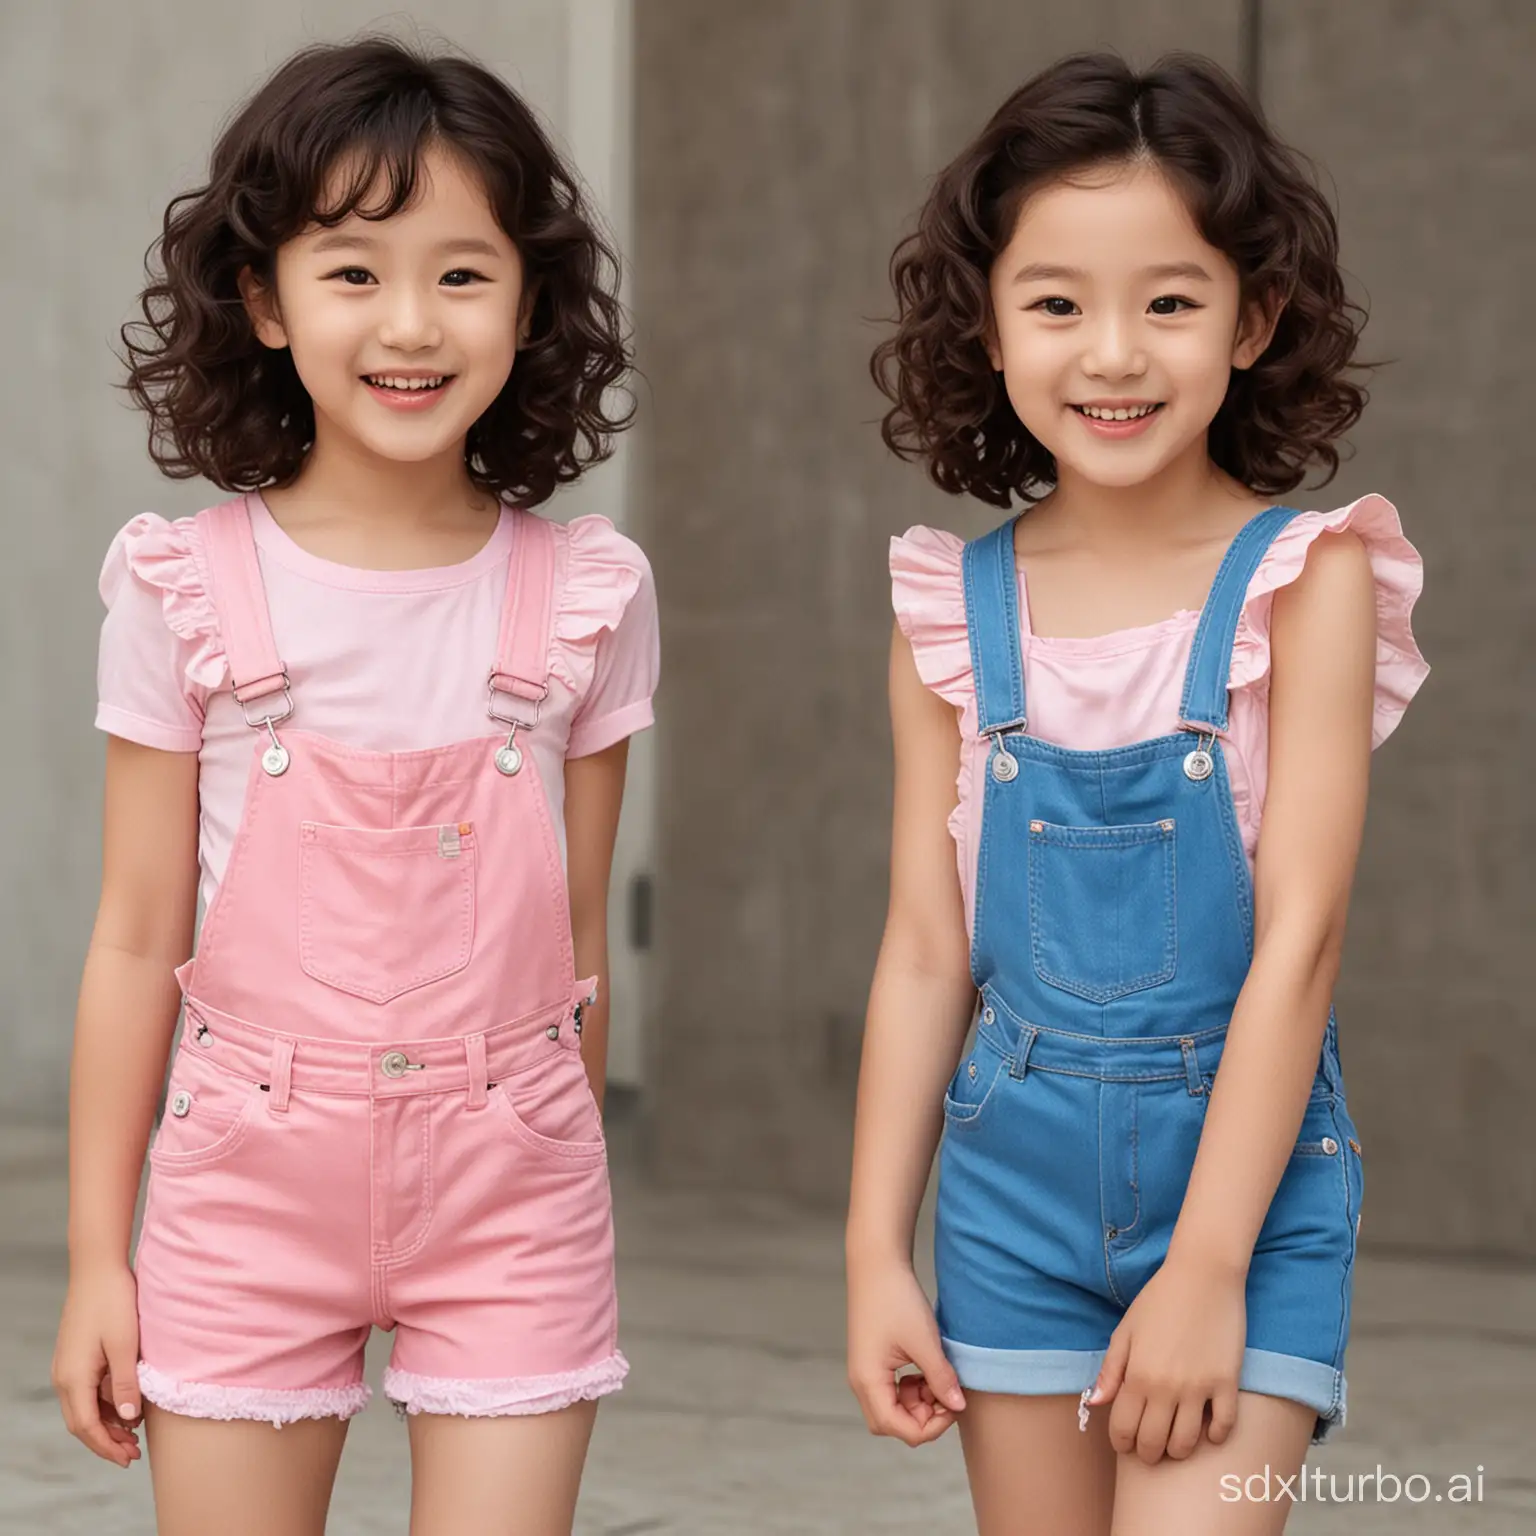 2 beautiful little girls happy and smile, with Jun Ji-hyun face, wearing blue color Bib short jeans. jeans, with short curly hair, another little girl with Jisoo face, short curly hair, wearing pink color Bib short jeans, they talk to each other